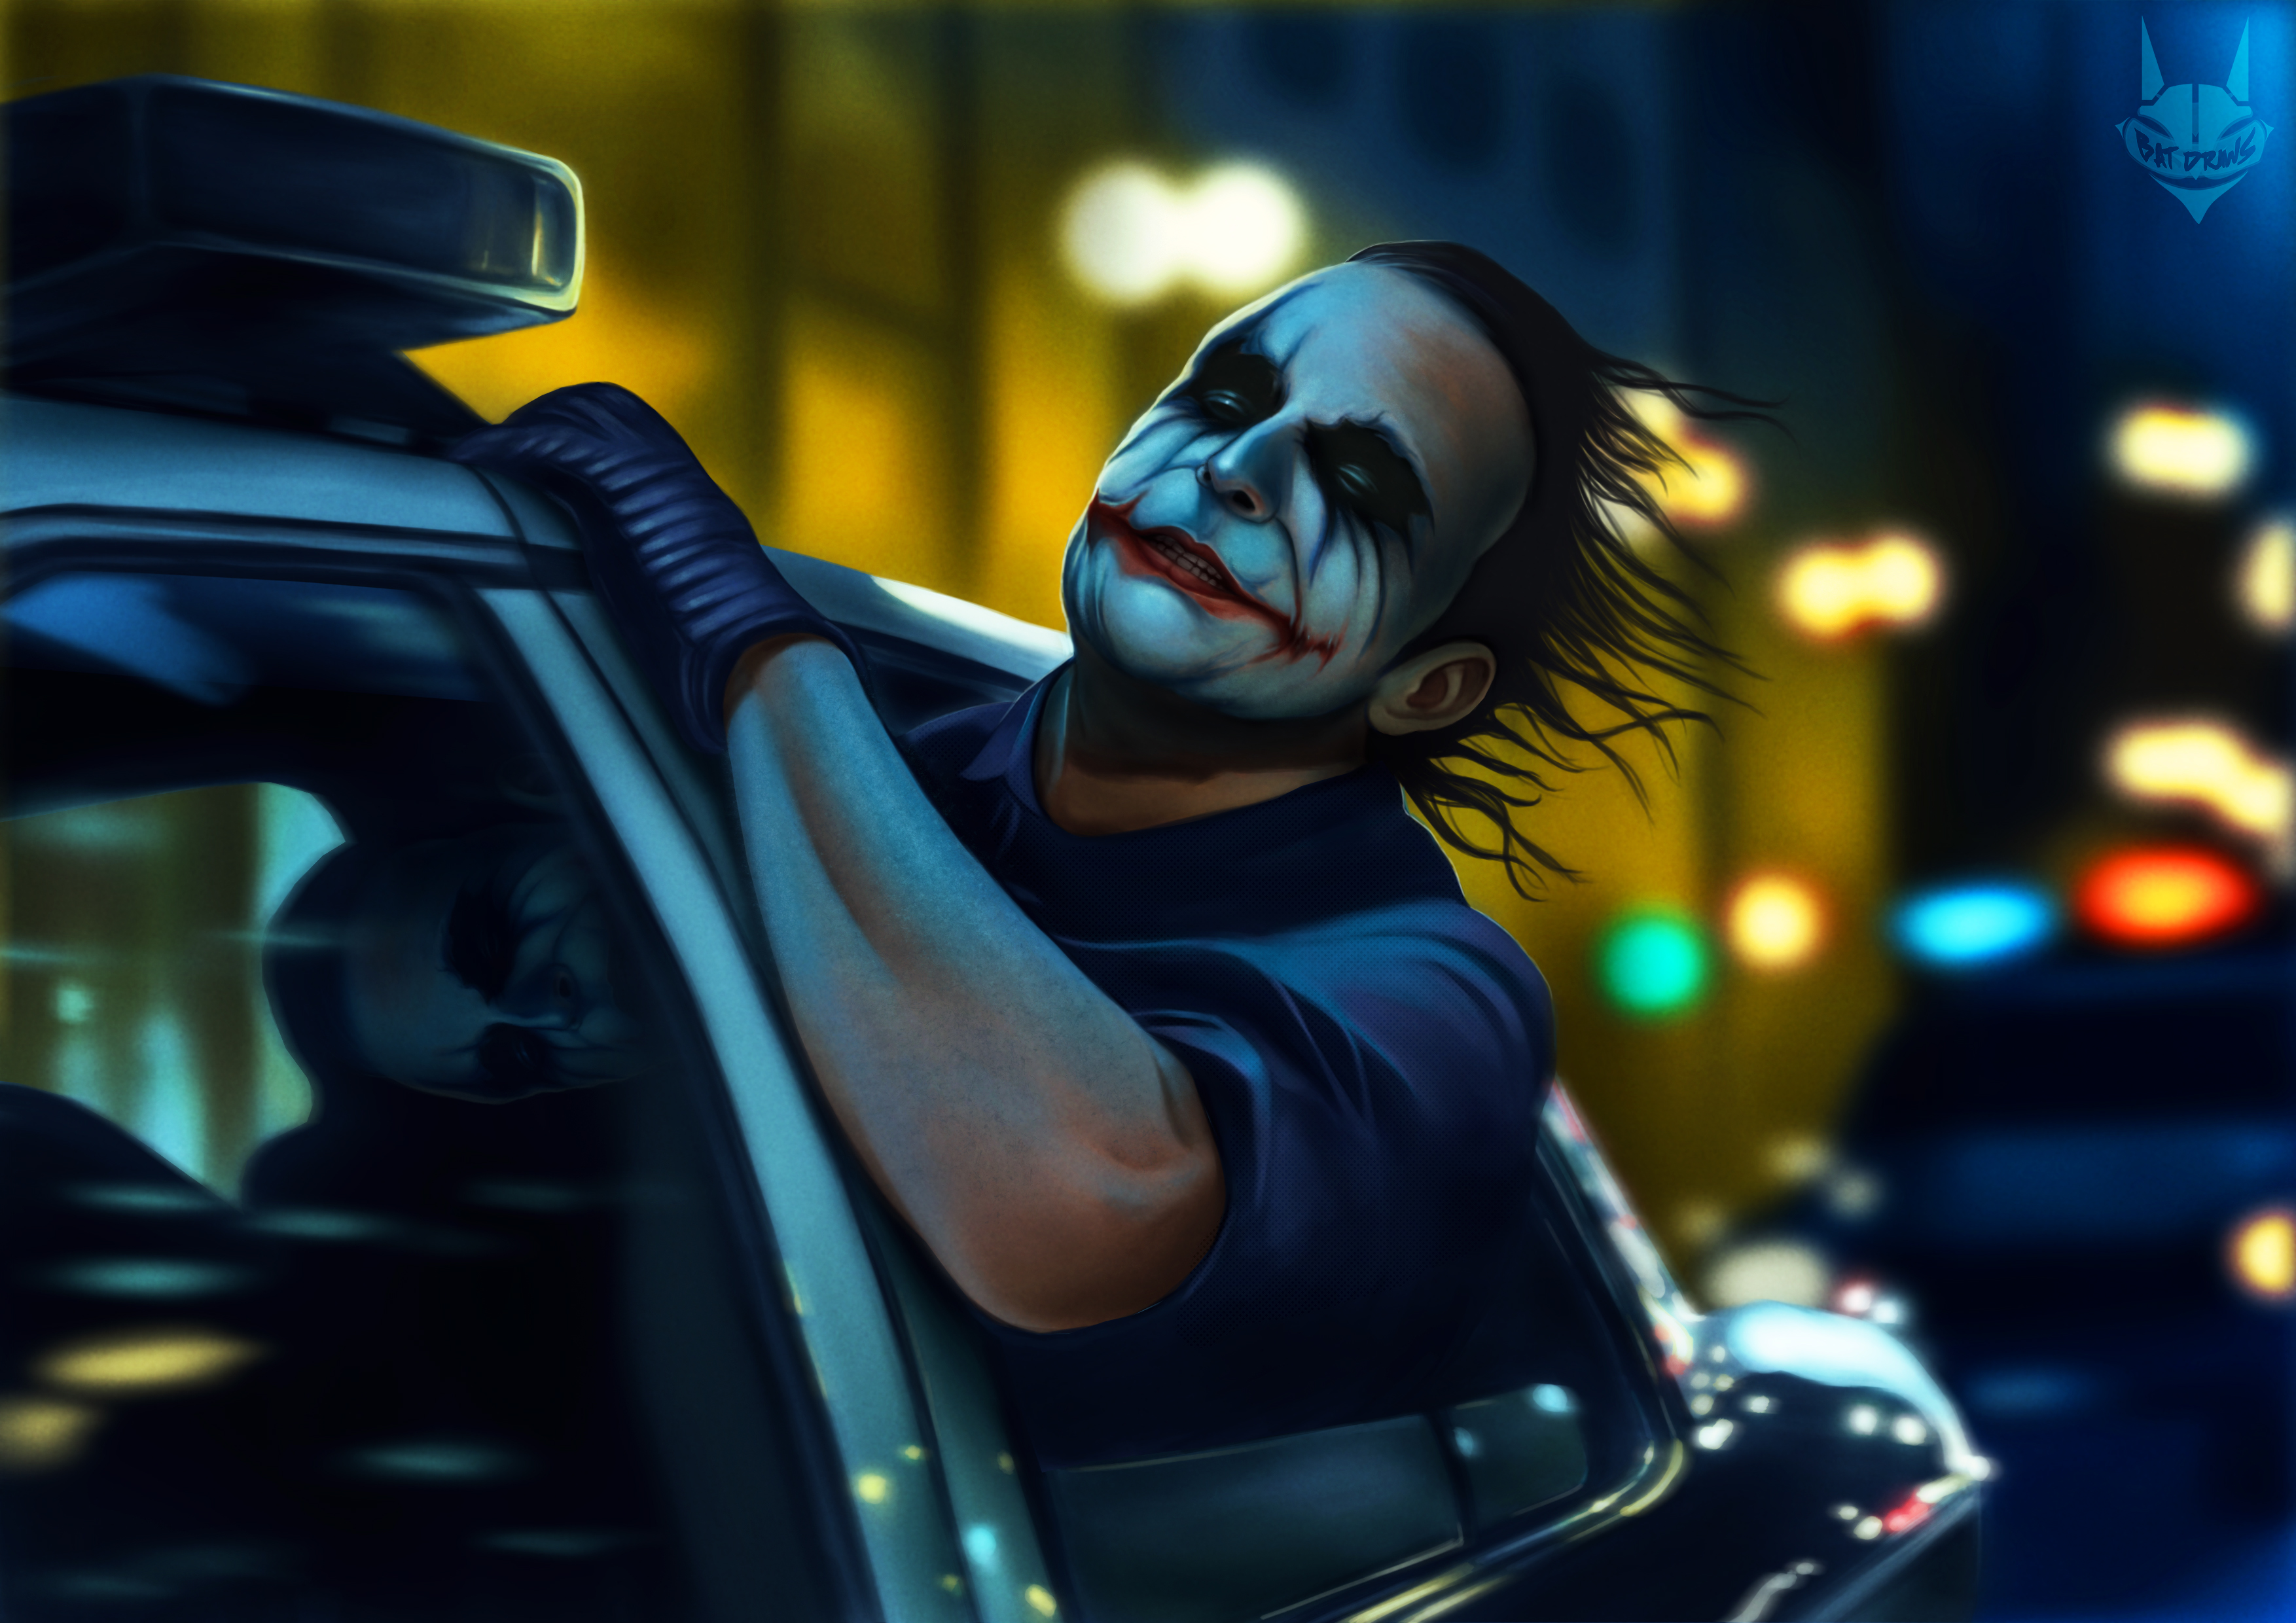 Joker The Dark Knight 4k 2018, HD Superheroes, 4k Wallpapers, Images